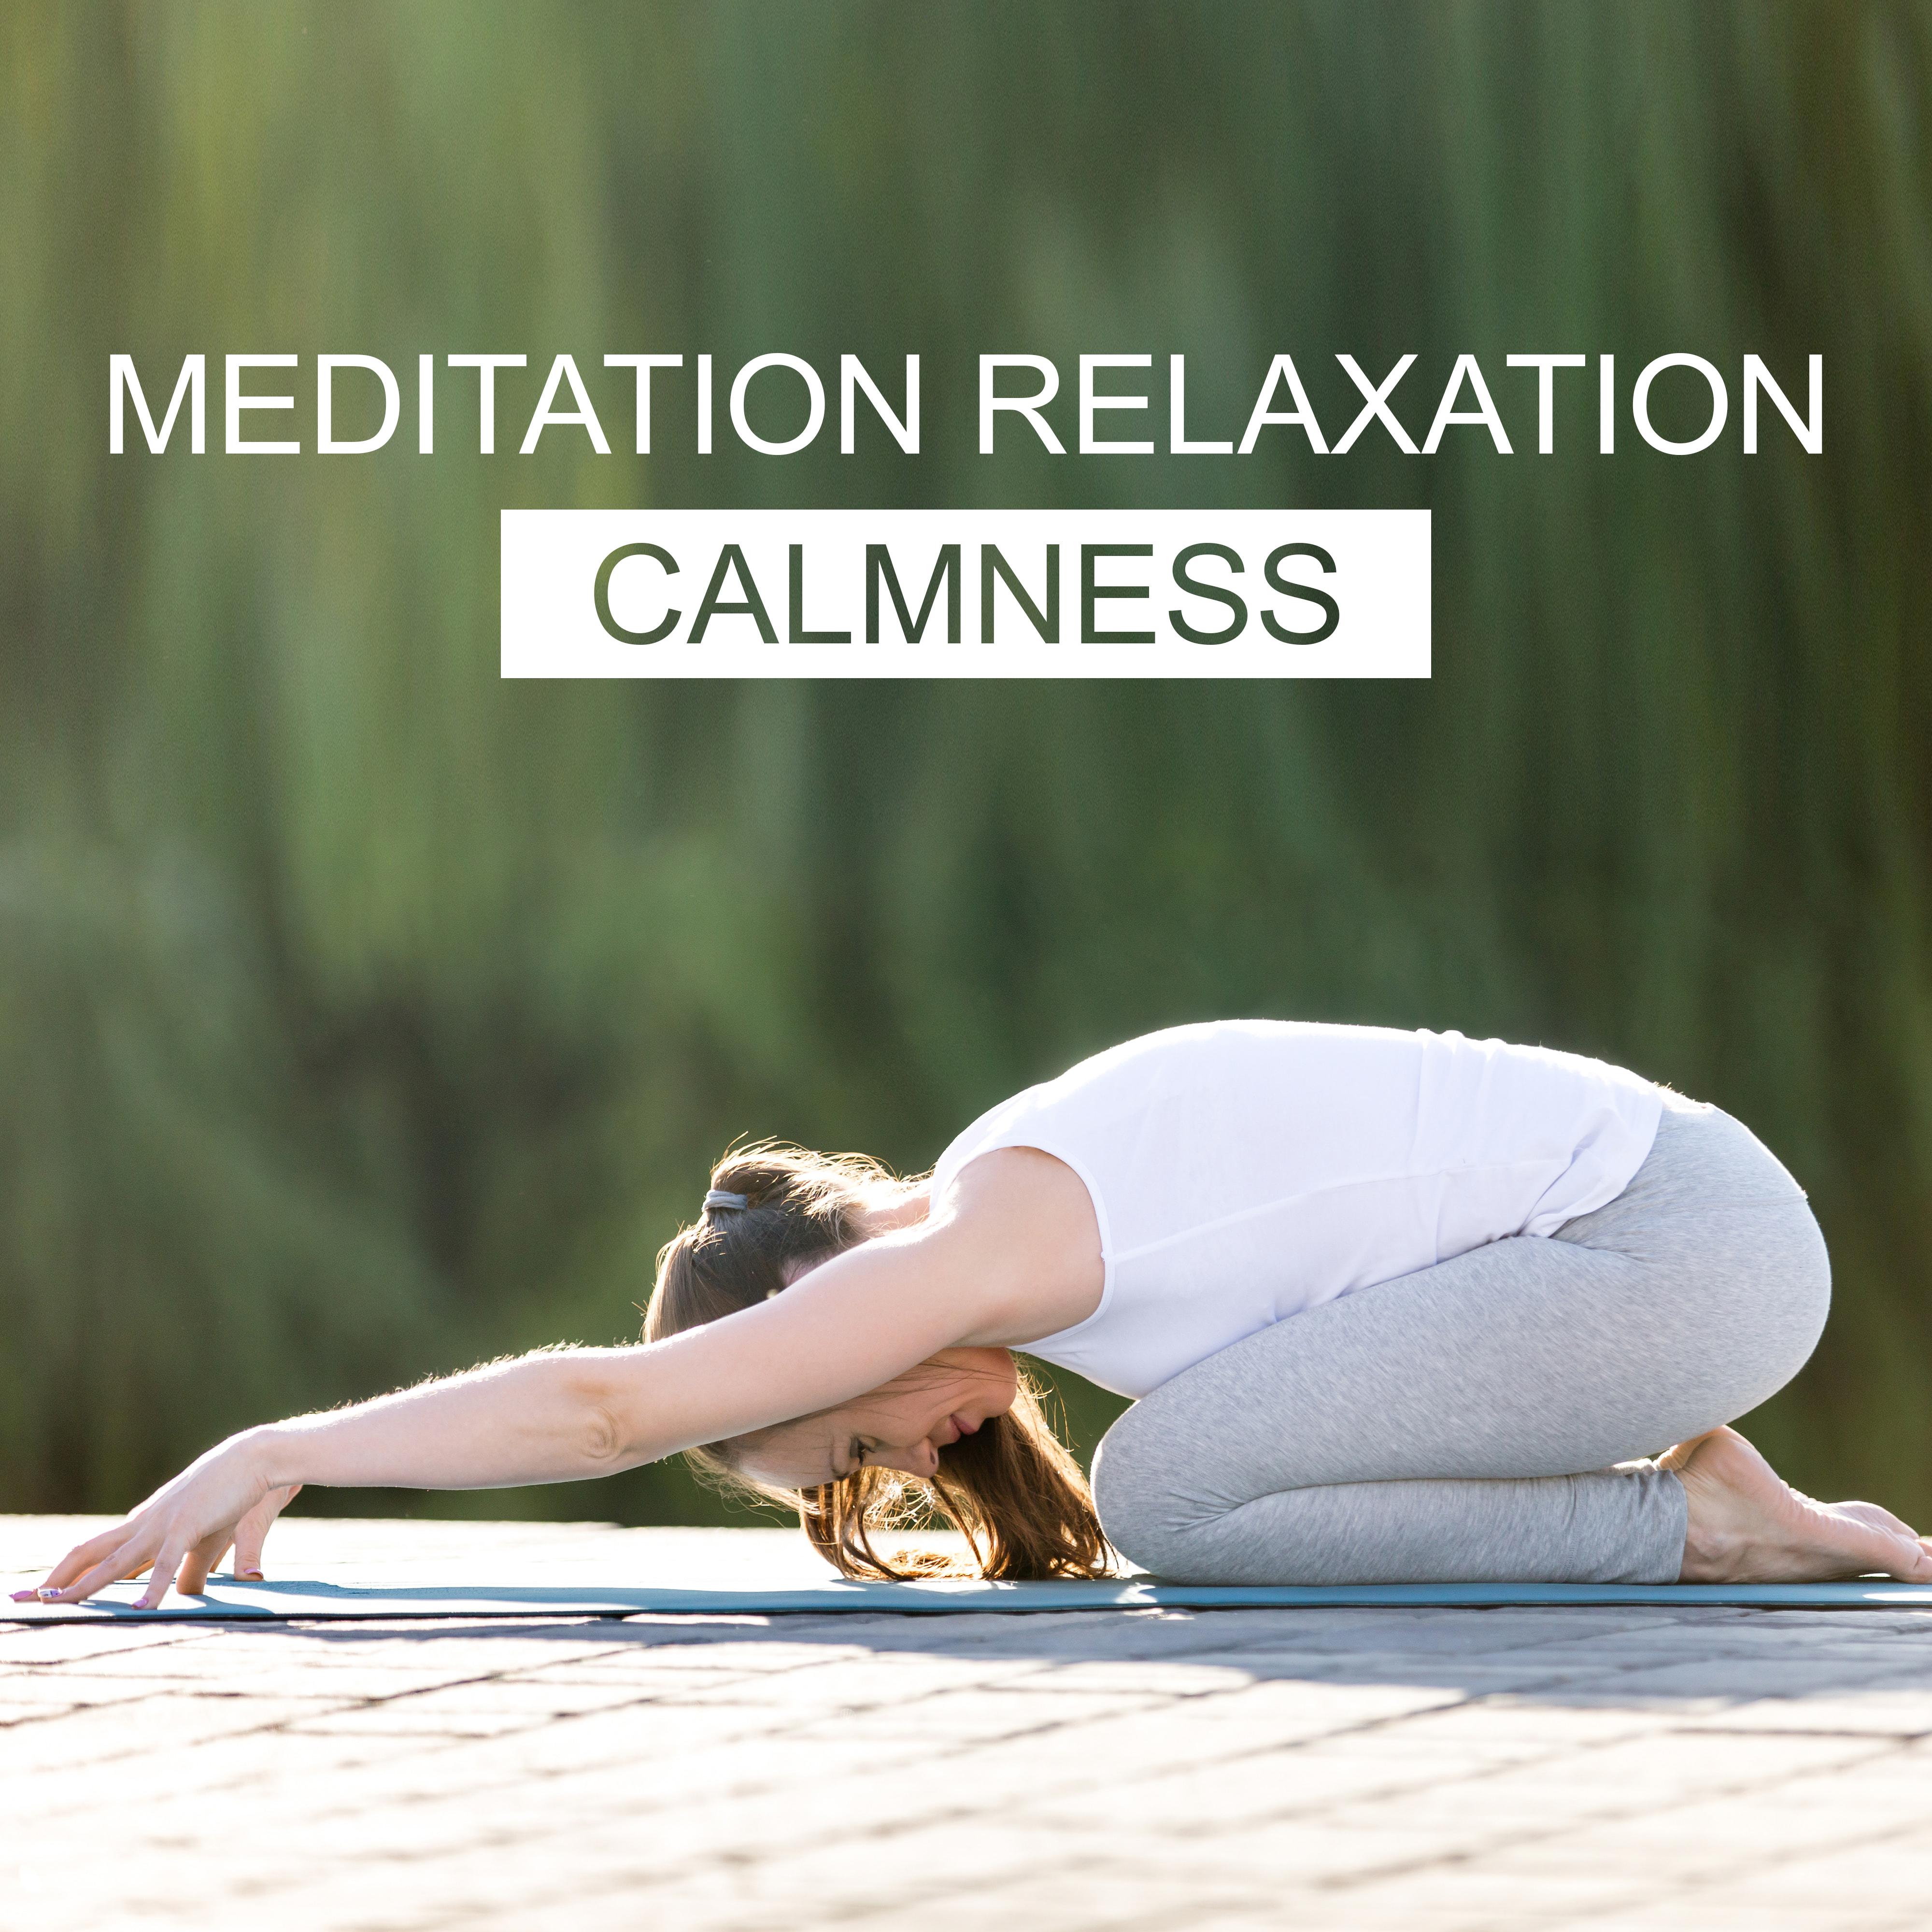 Meditation Relaxation Calmness